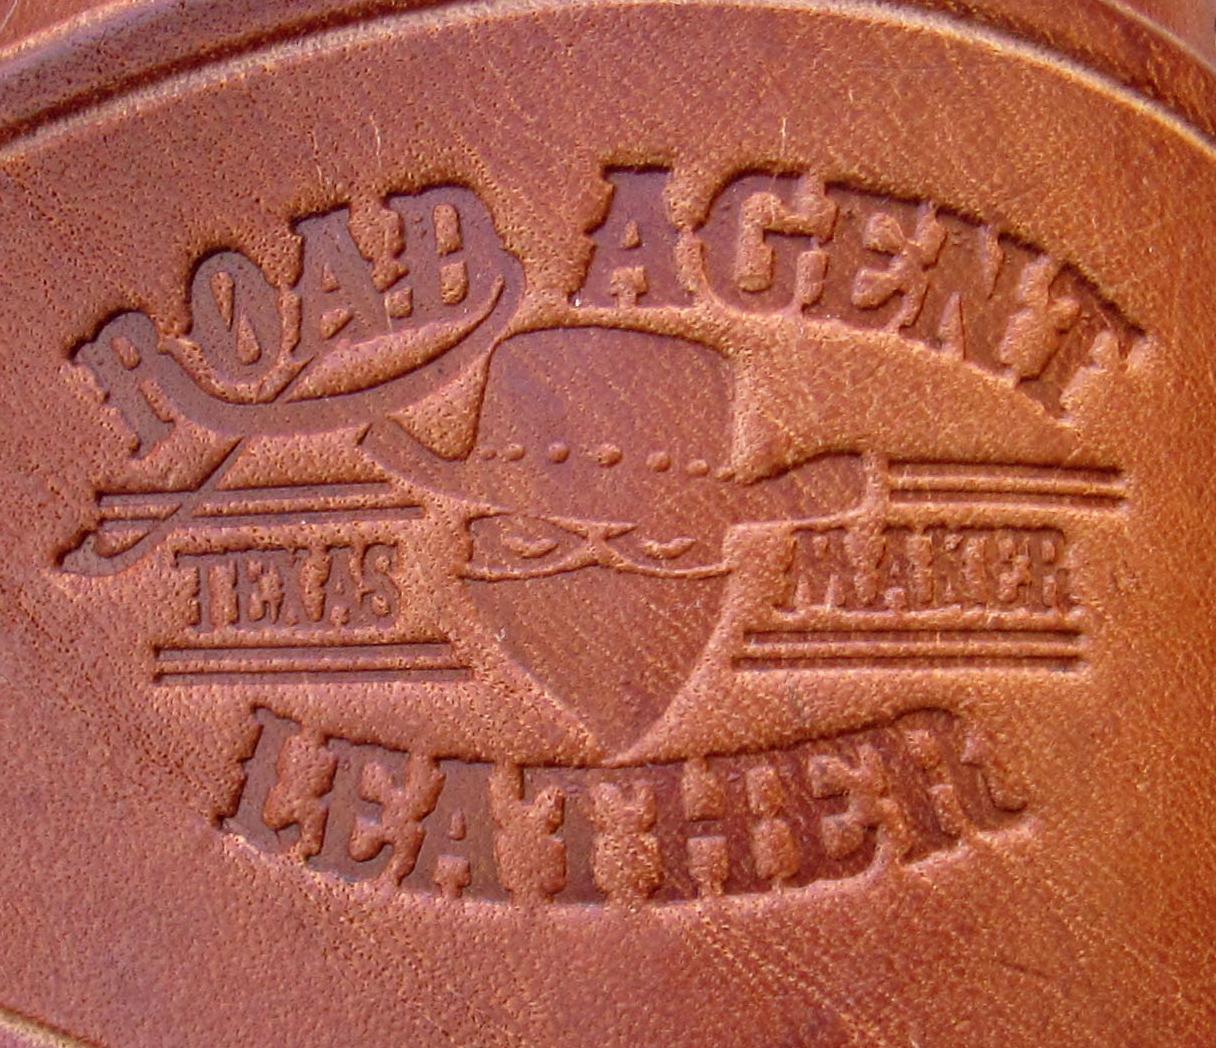 Iowa Made Stamp - Leather Stamp Maker